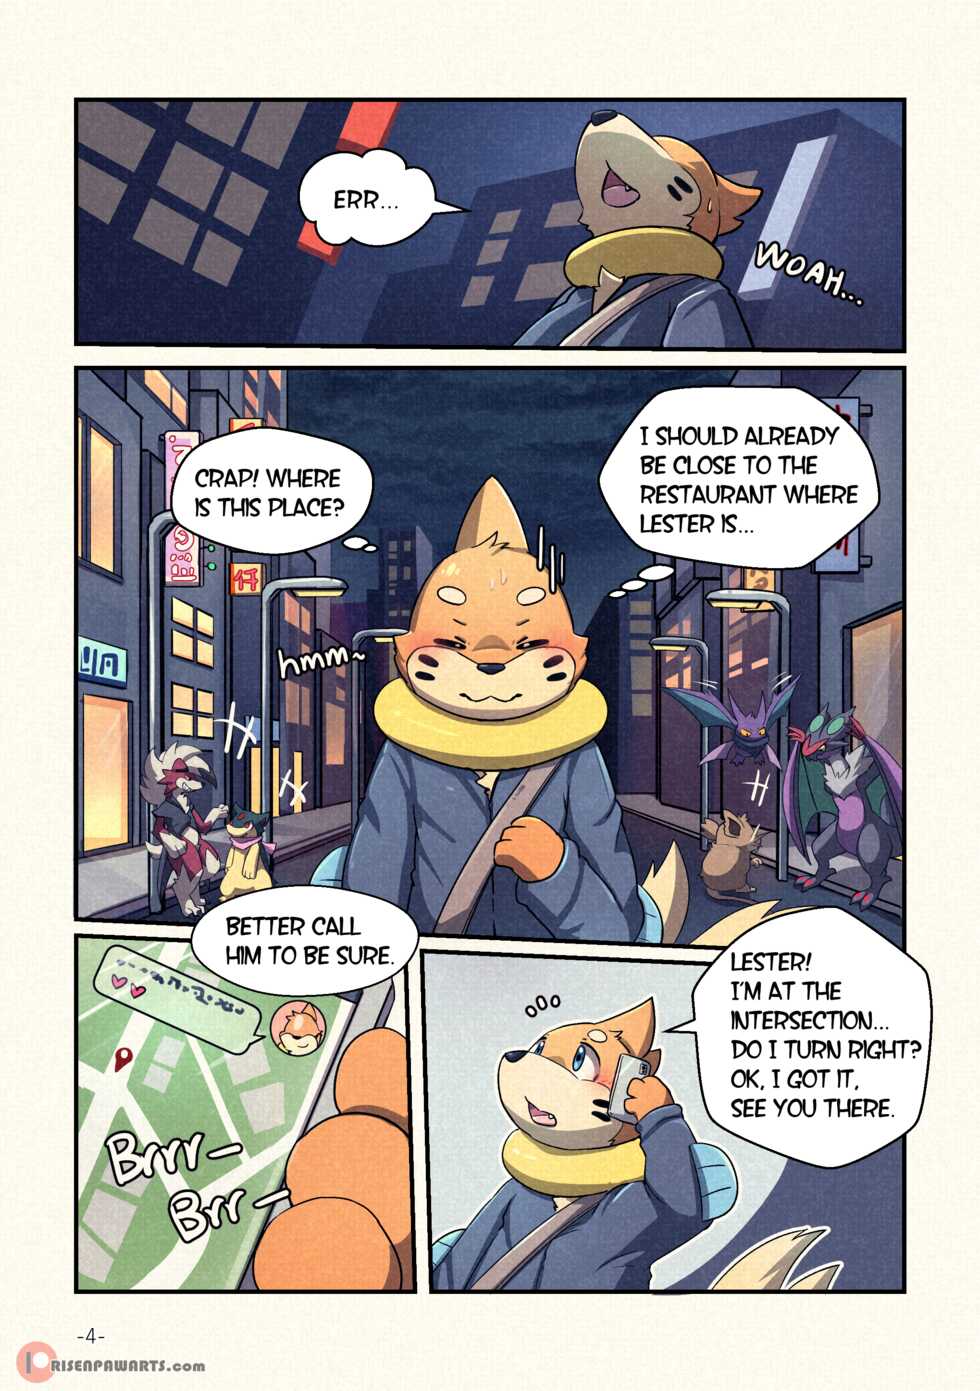 [RisenPaw] The Fulll Moon Part 2 (Pokemon) - Page 2